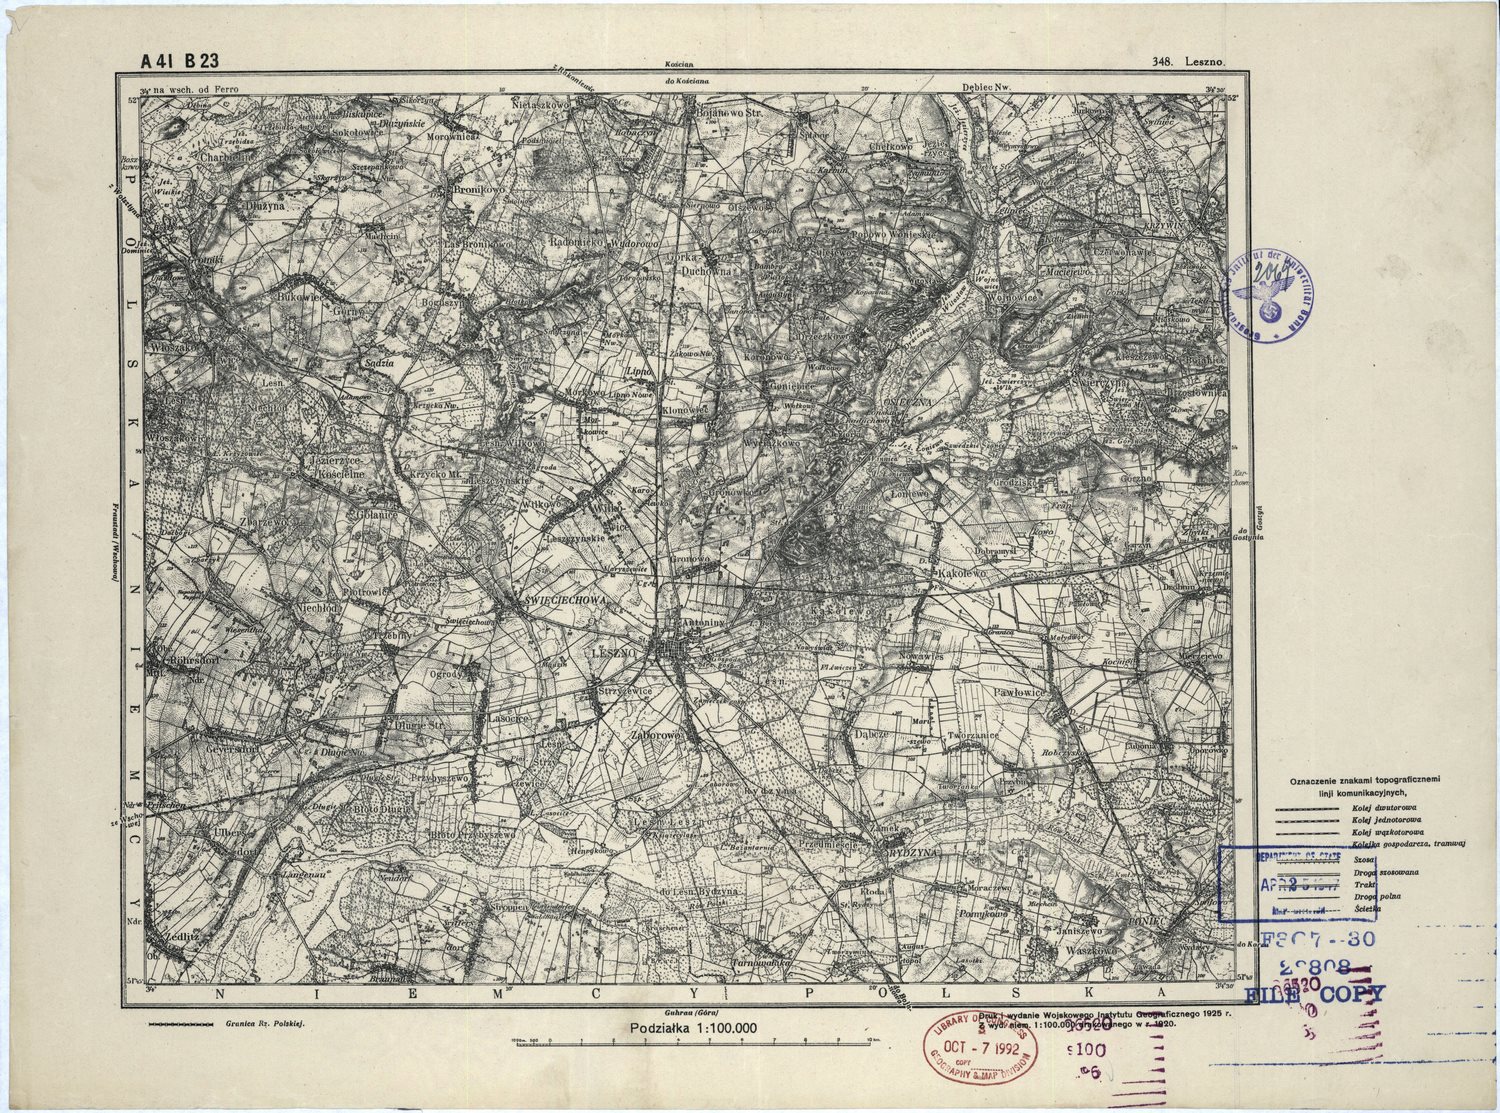 Mapa Leszna z 1925 roku